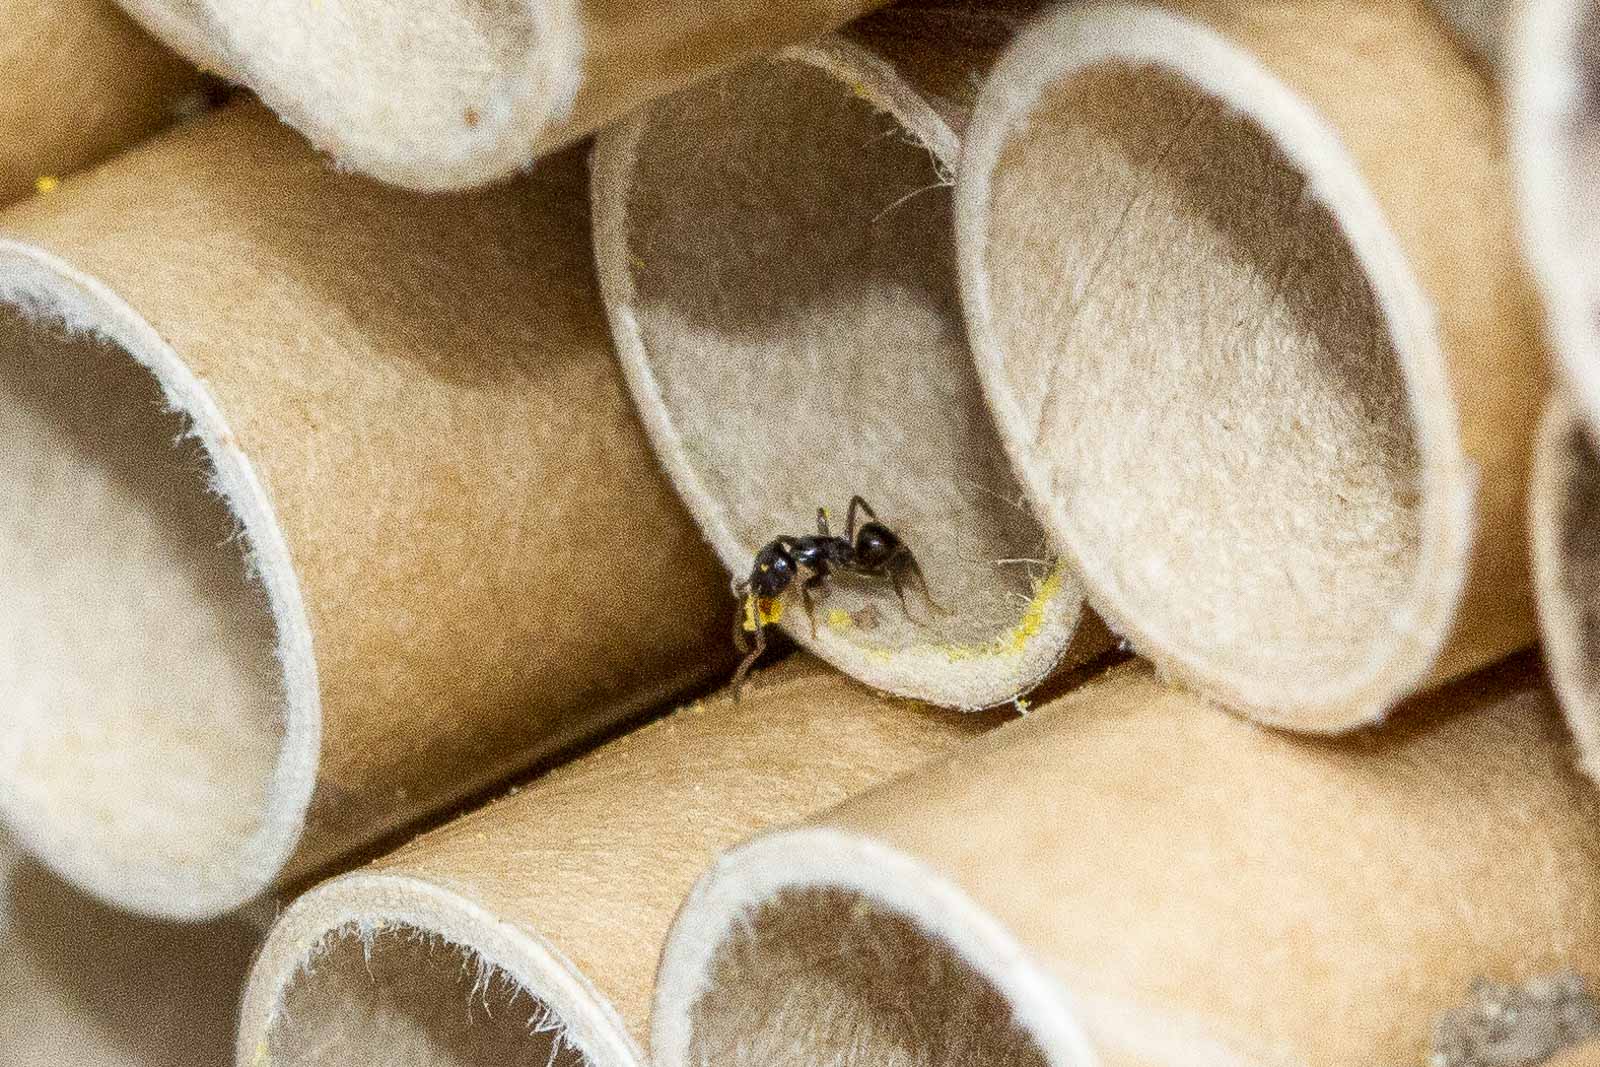 Sugar ant raiding pollen from a mason bee house, photo courtesy Jay Thompson